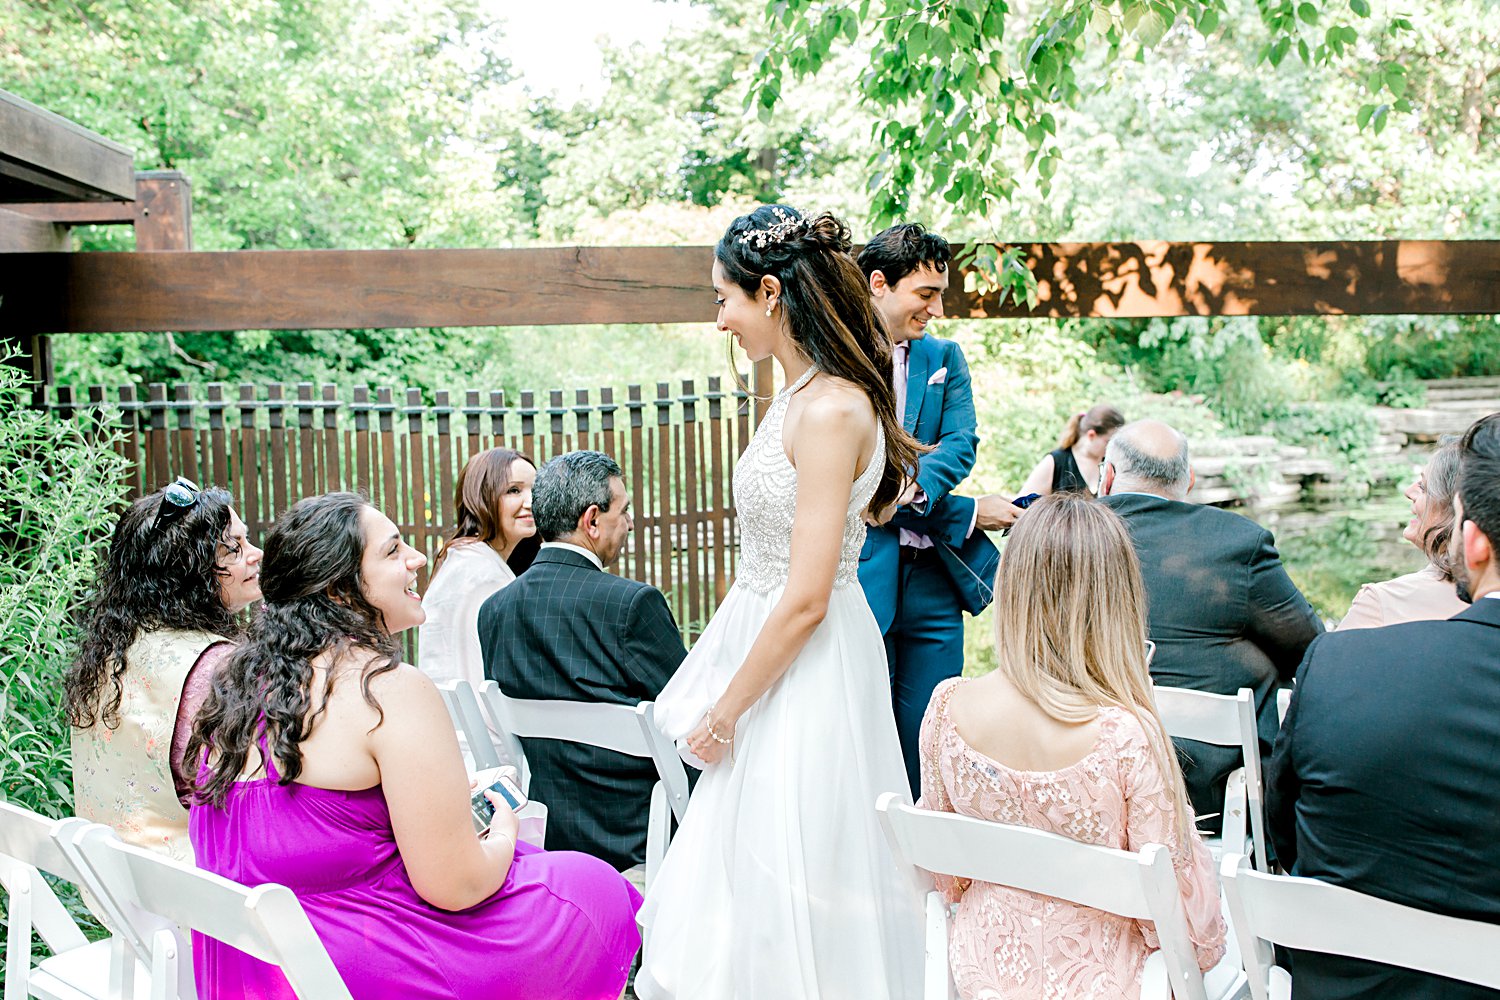 Wilmette Harbor Wedding » Denise Espinosa Photography ‖ http://photographybydre.com